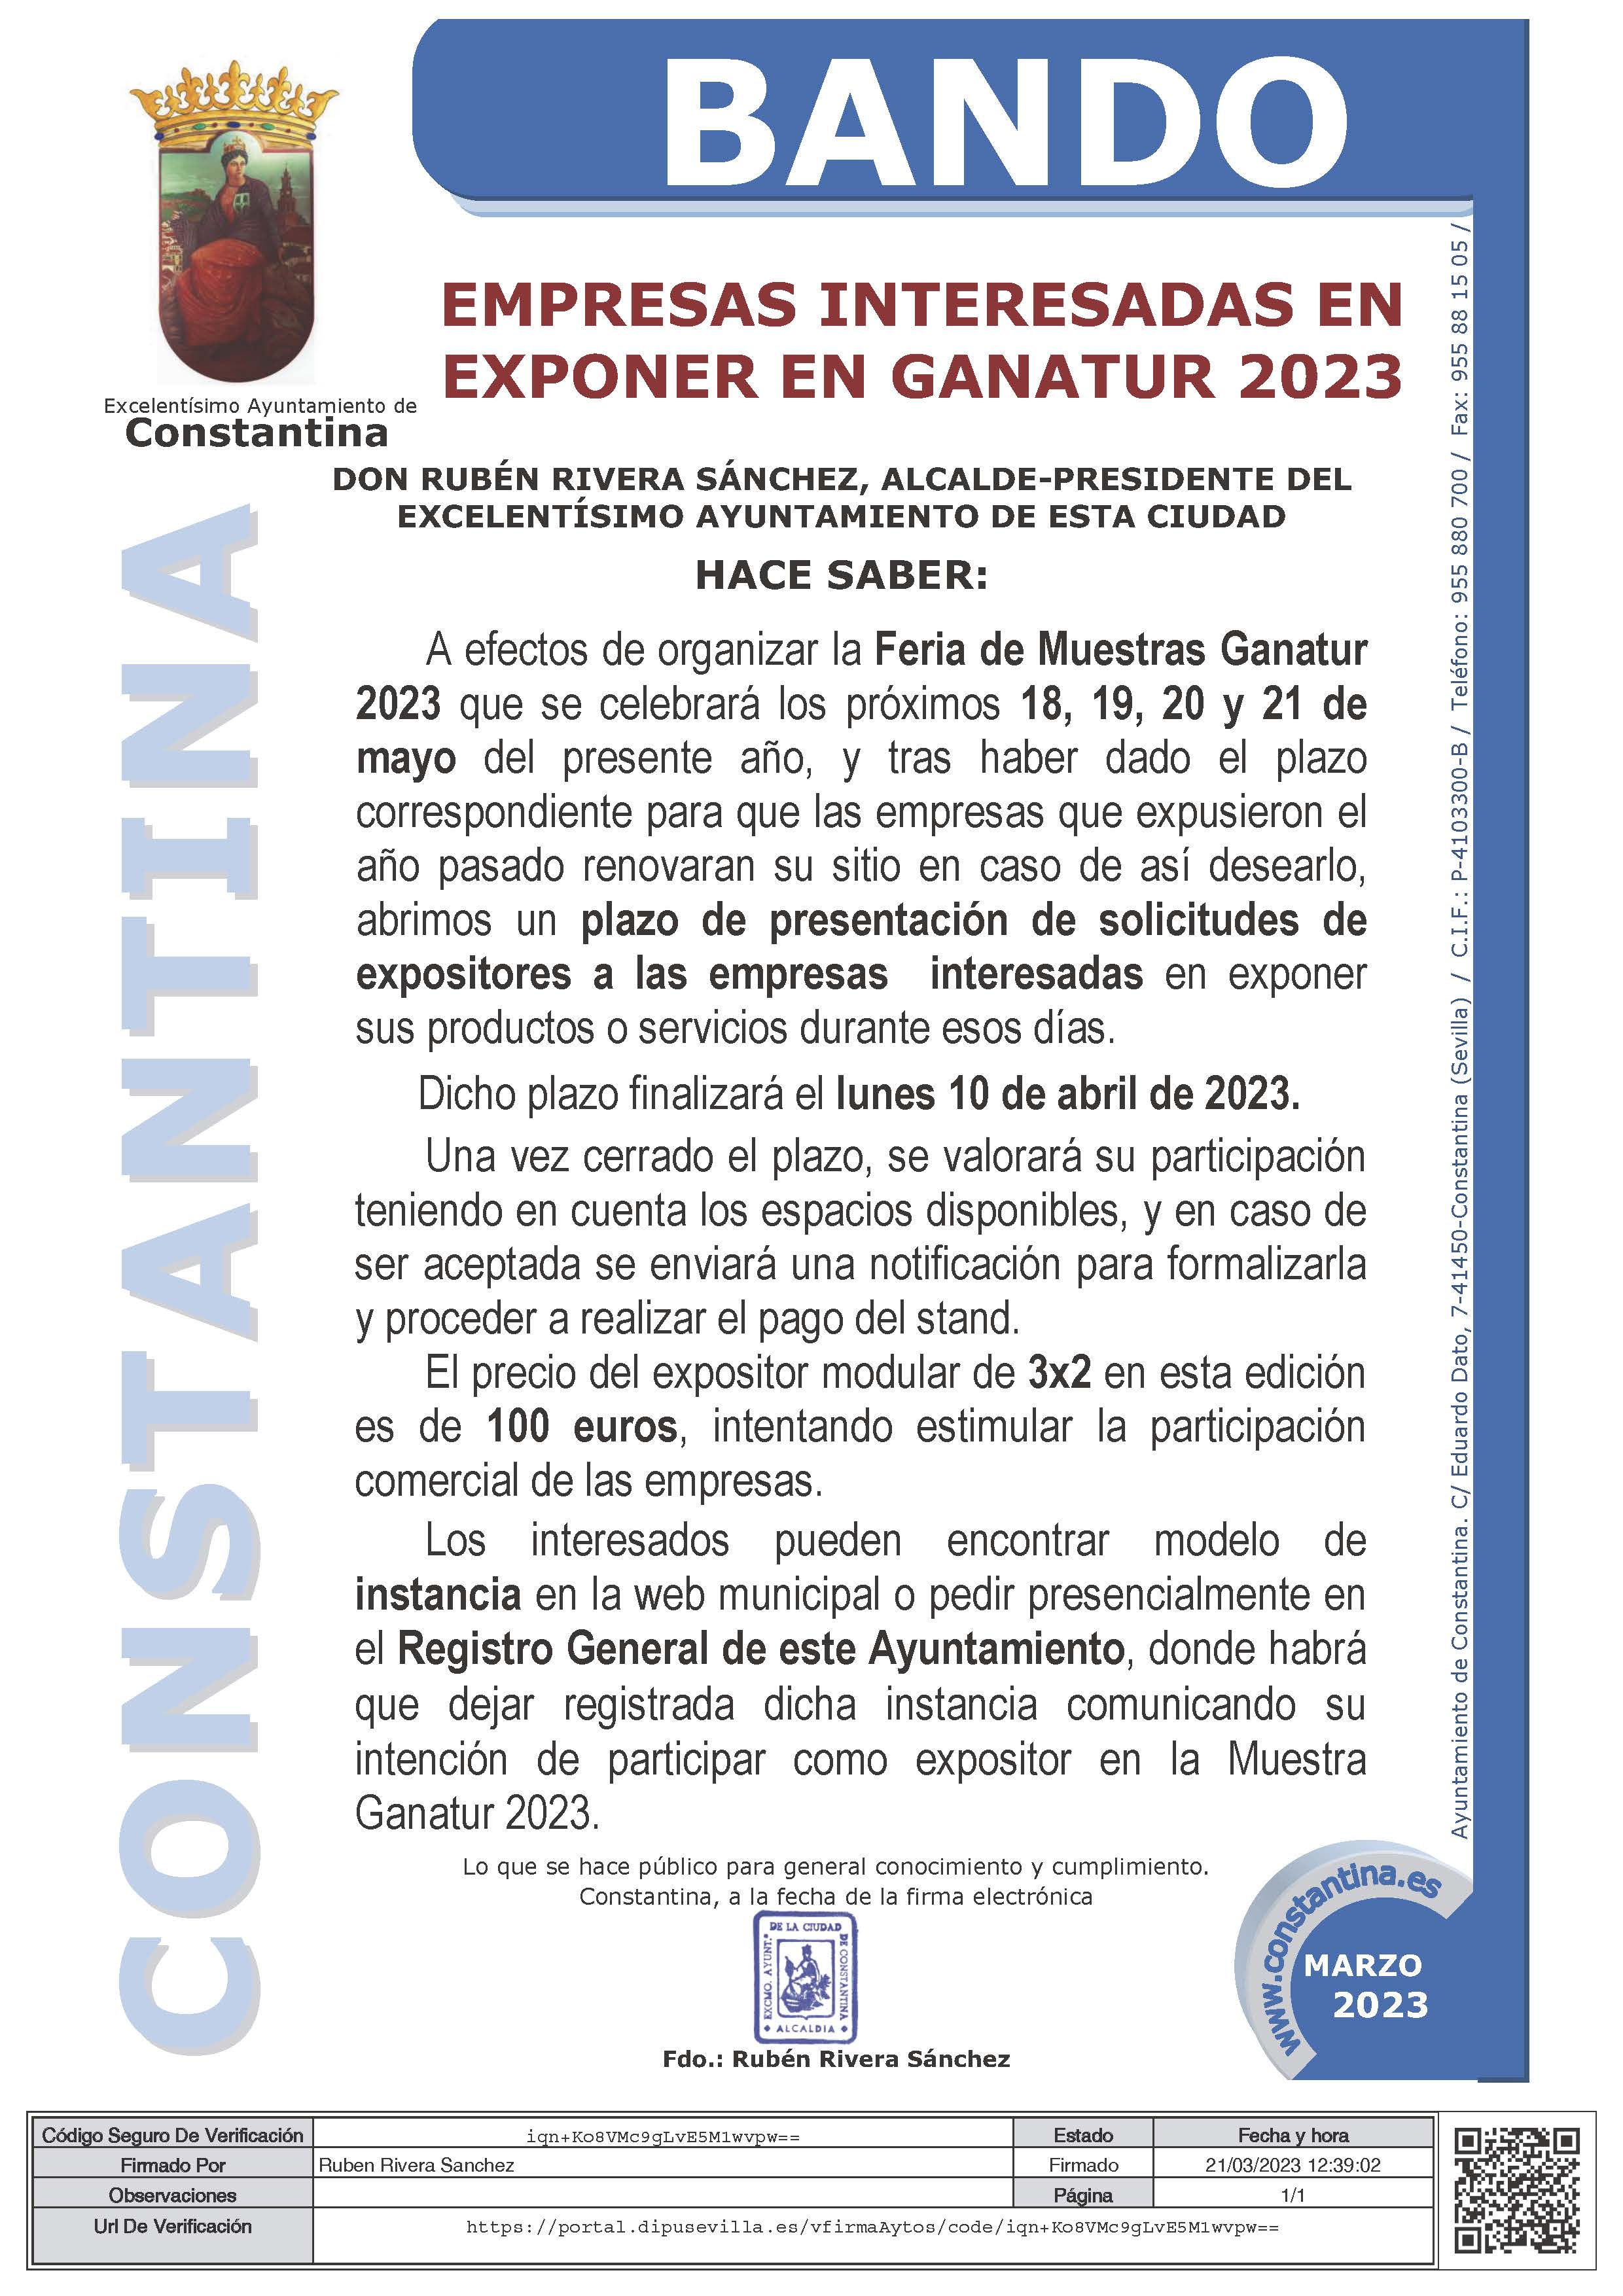 BANDO-EXPOSITORES-MUESTRA GANATUR-CONSTANTINA 2023